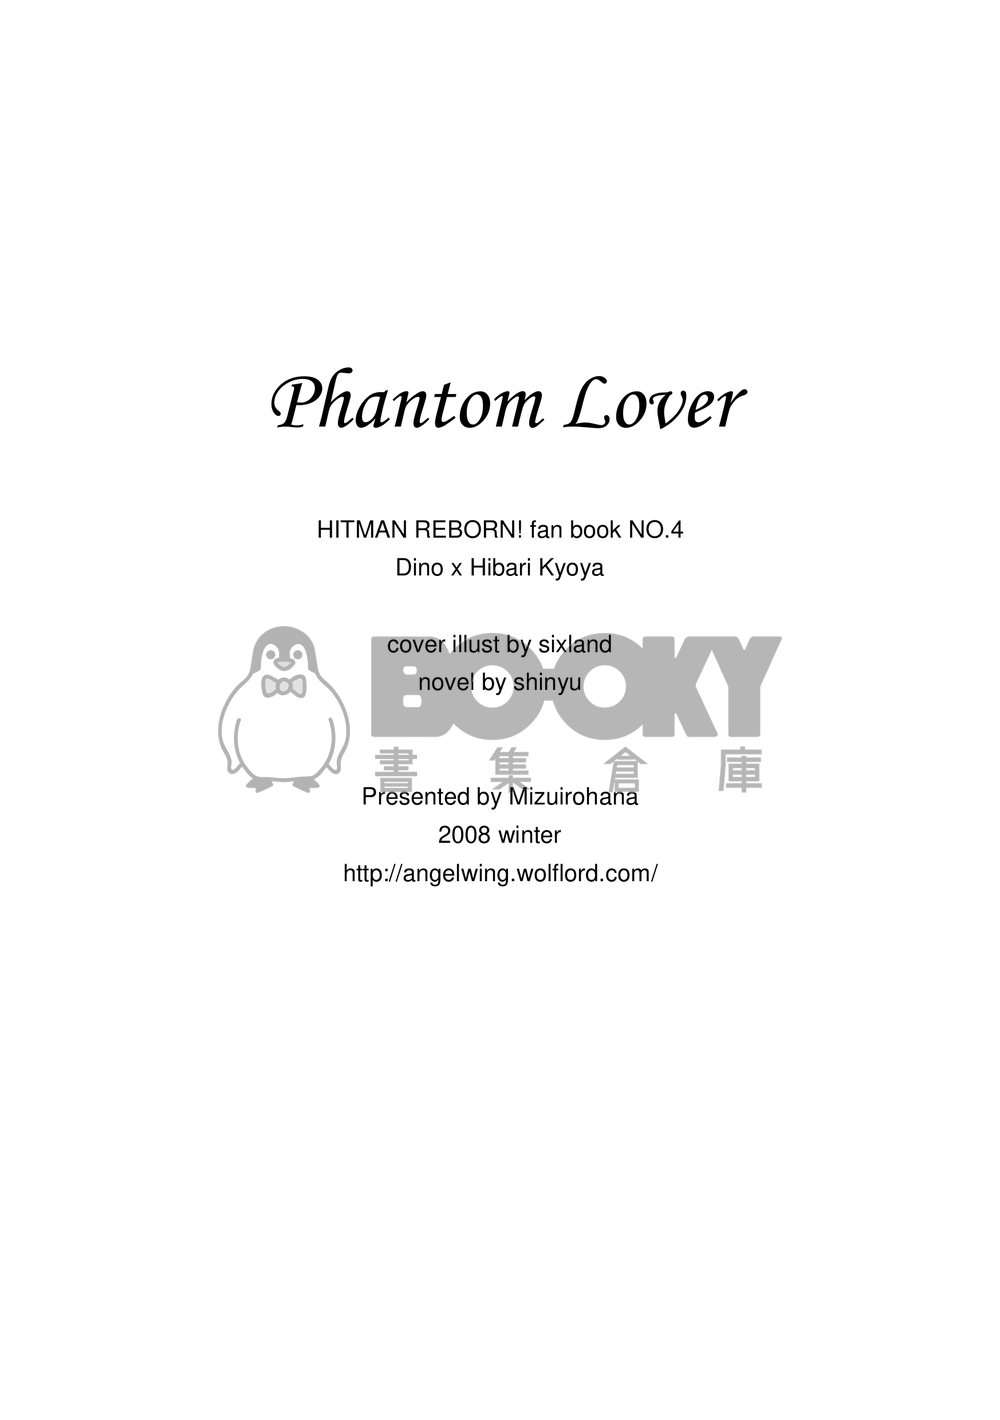 [家教][迪雲]Phantom Lover 試閱圖片